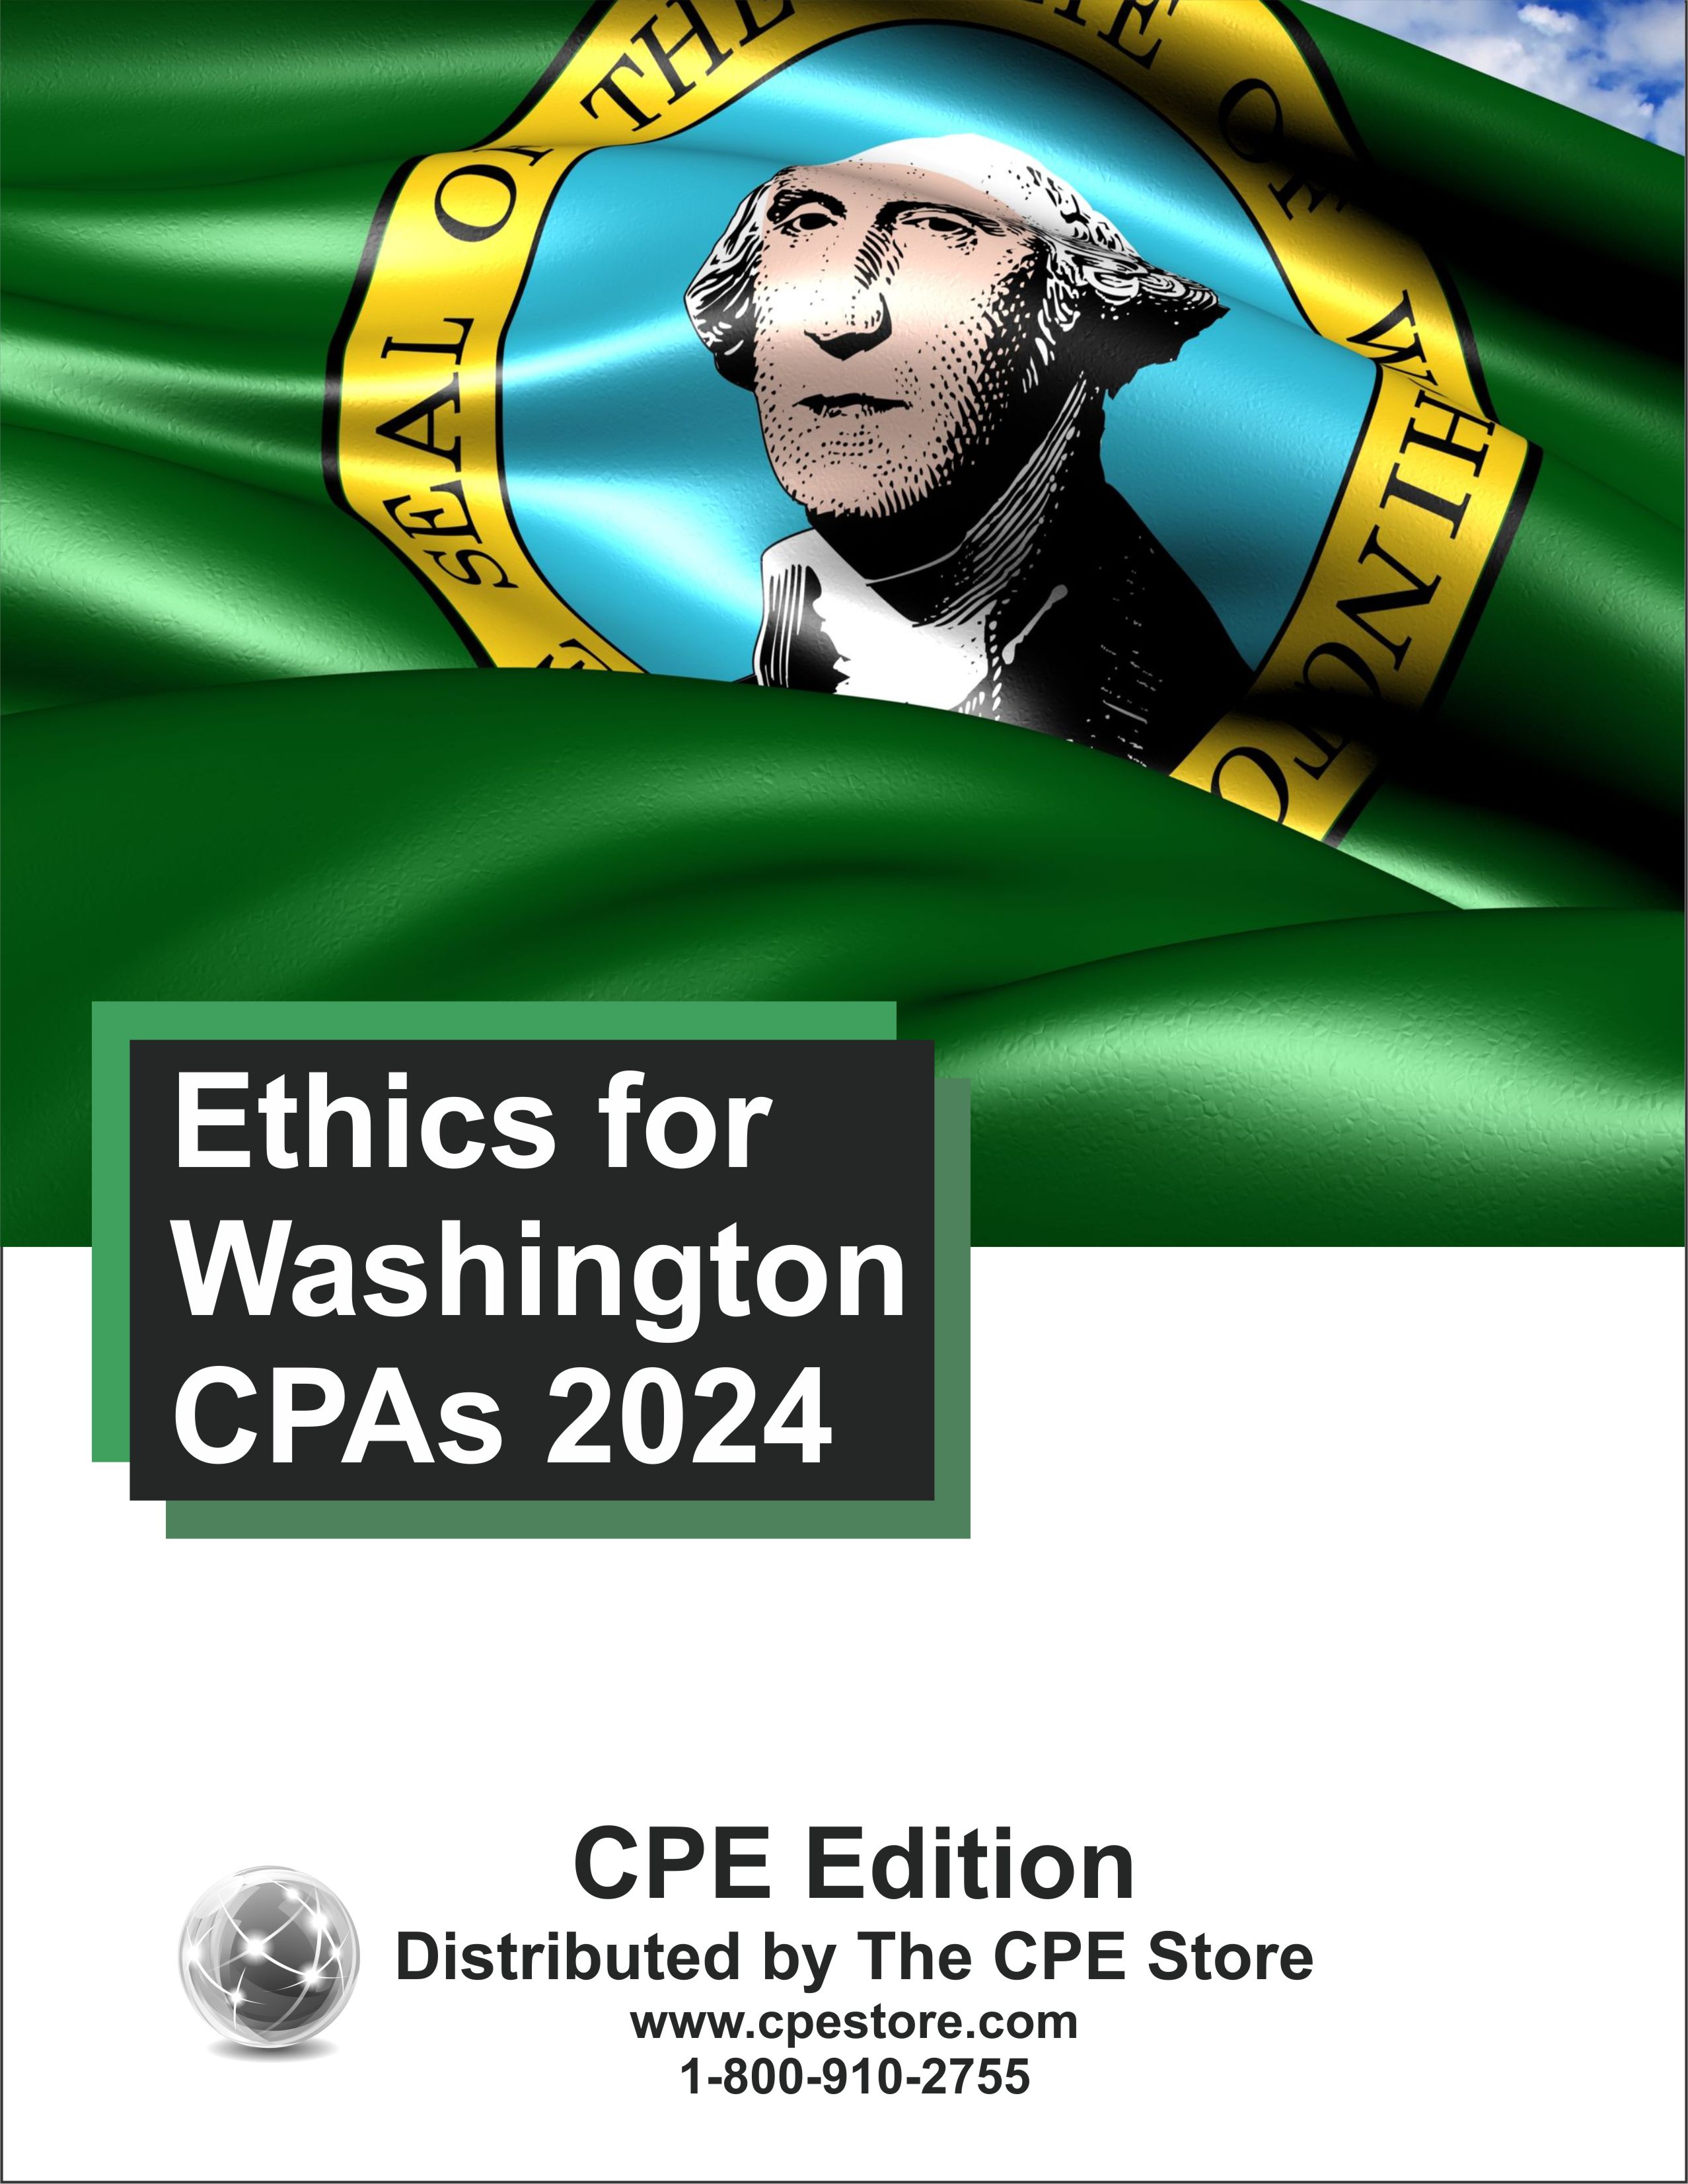 Ethics for Washington CPAs 2024